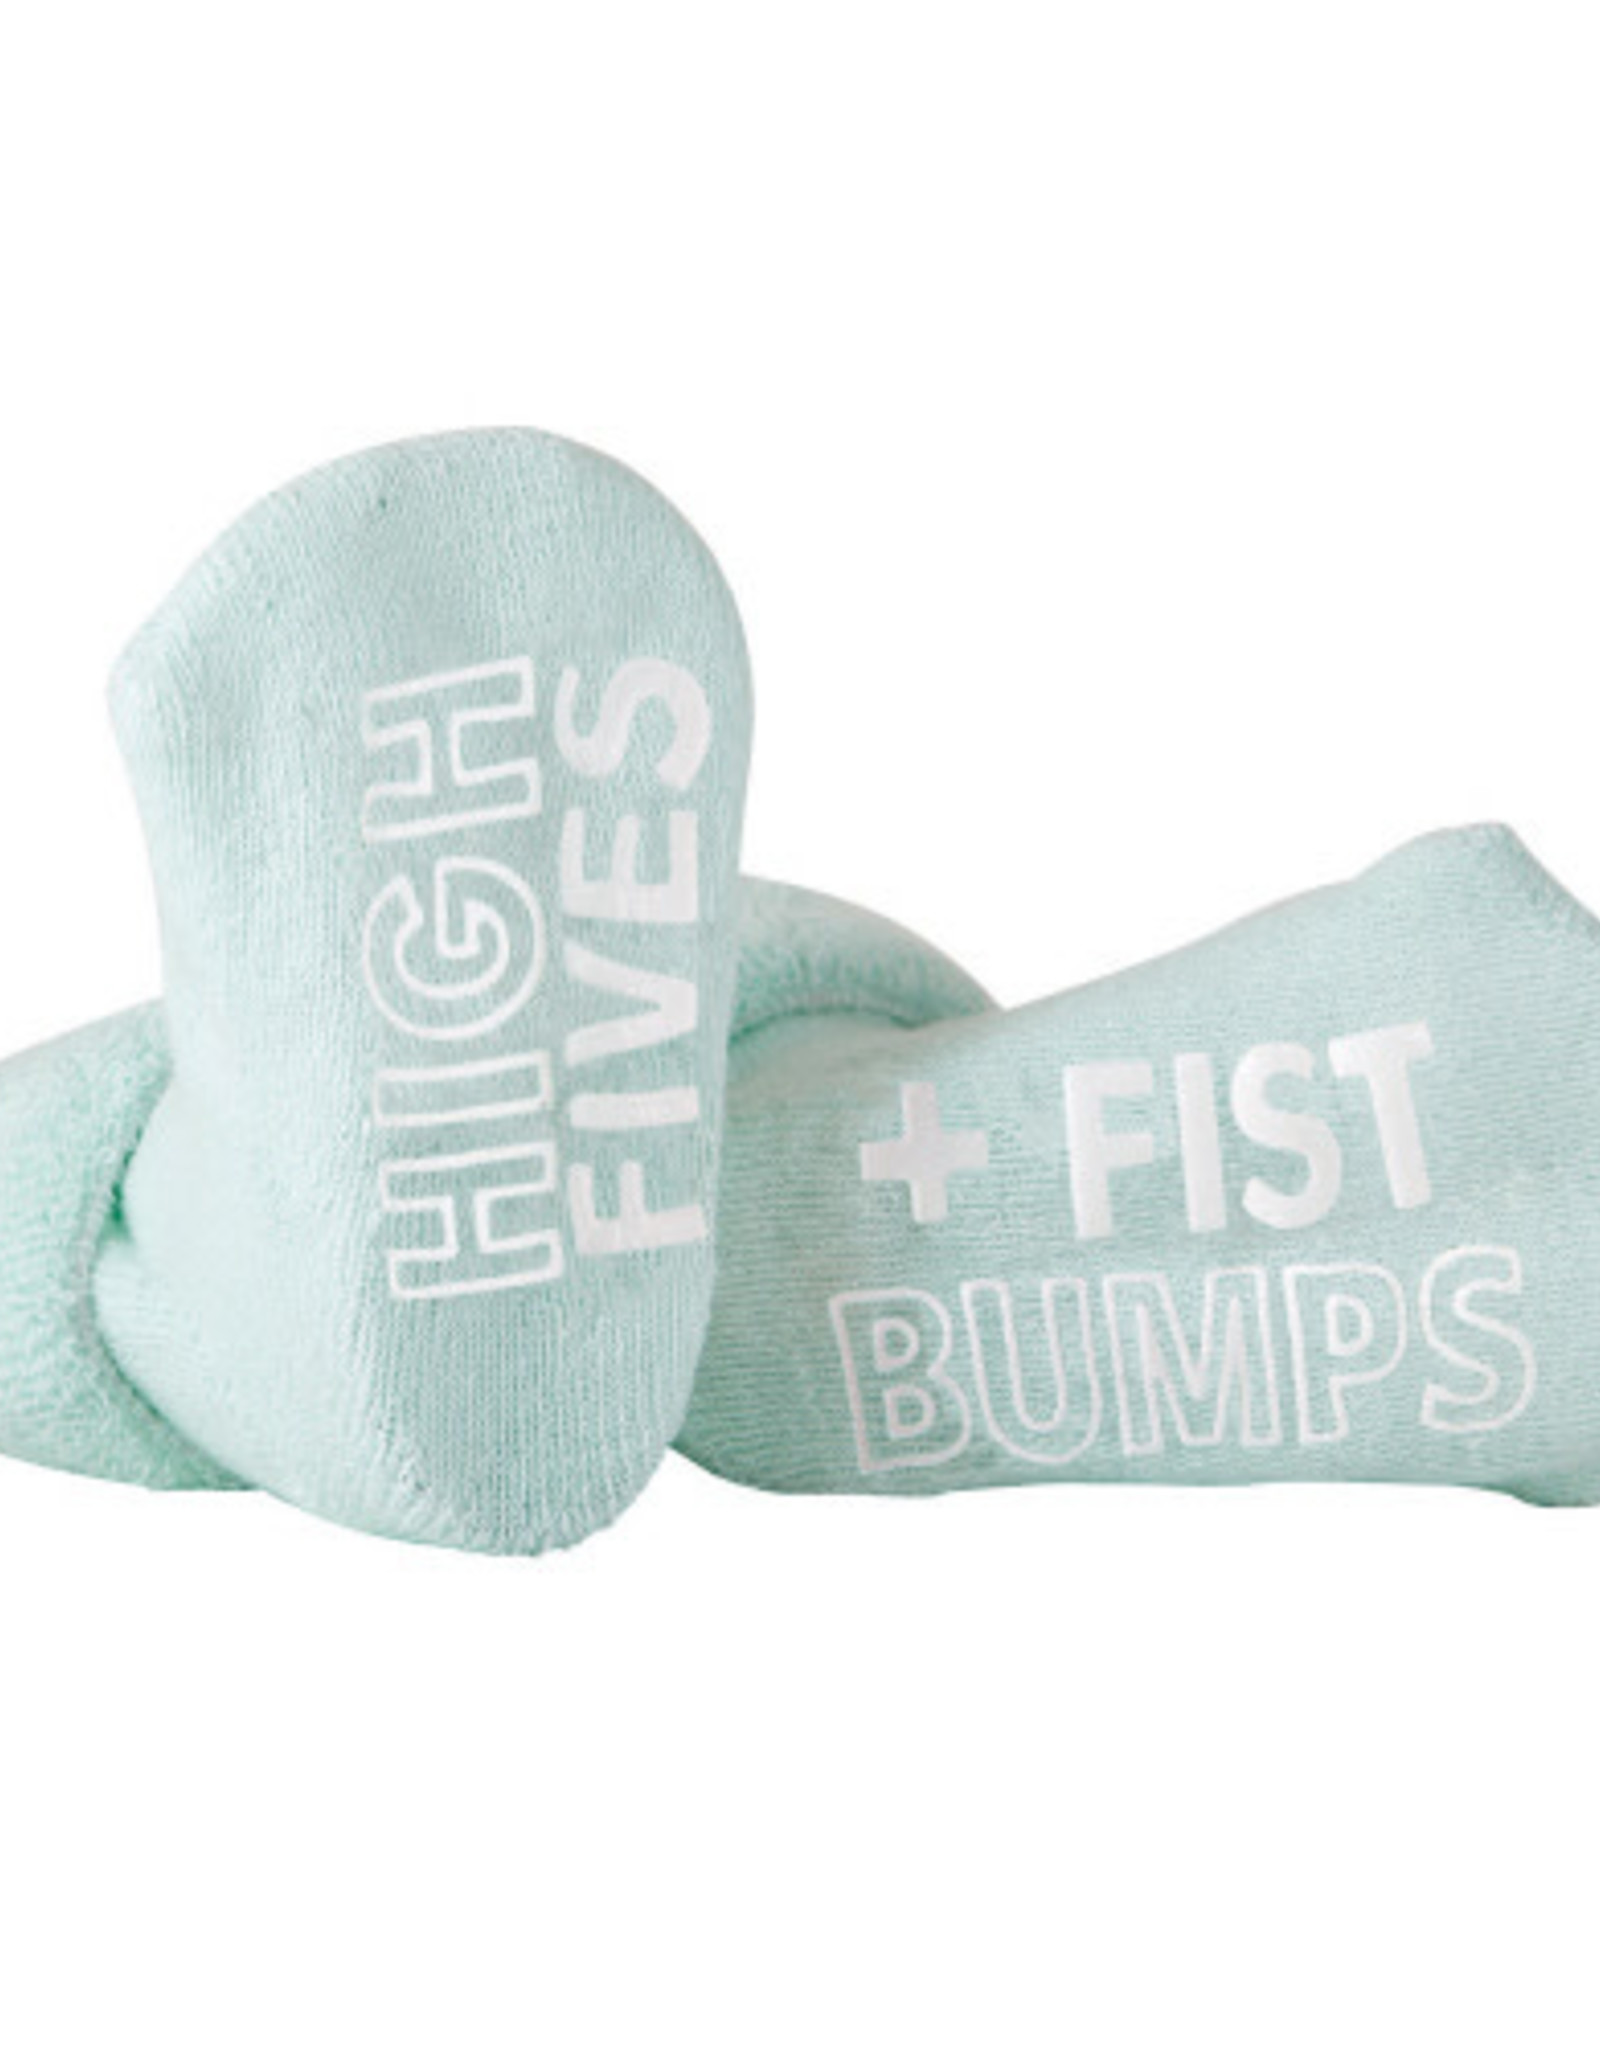 Creative Brands Cotton Baby Socks Non Slip 3- 12 month